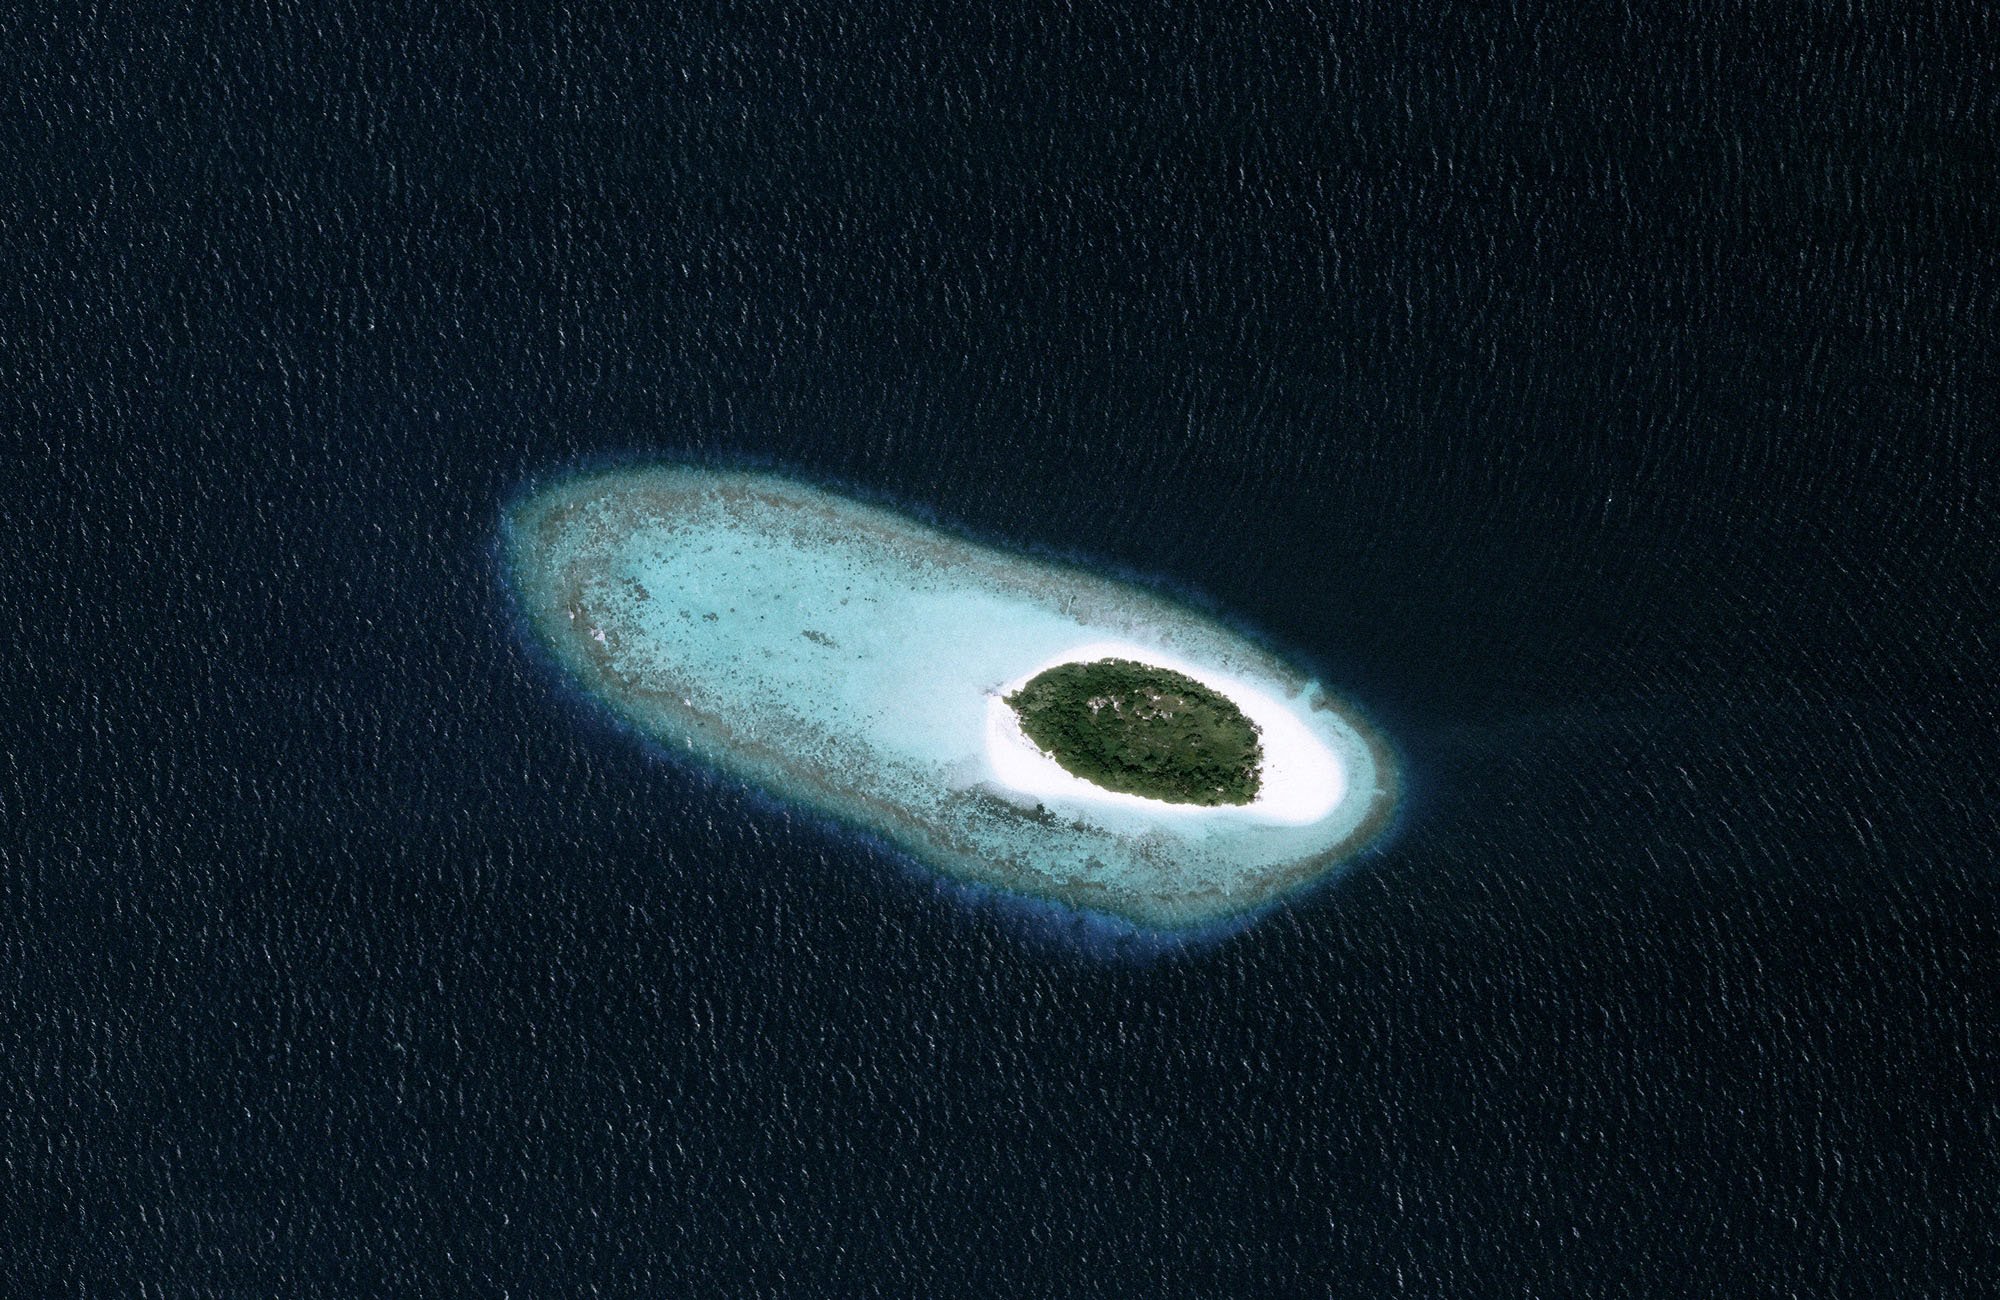  Araigathaa, Maldives 